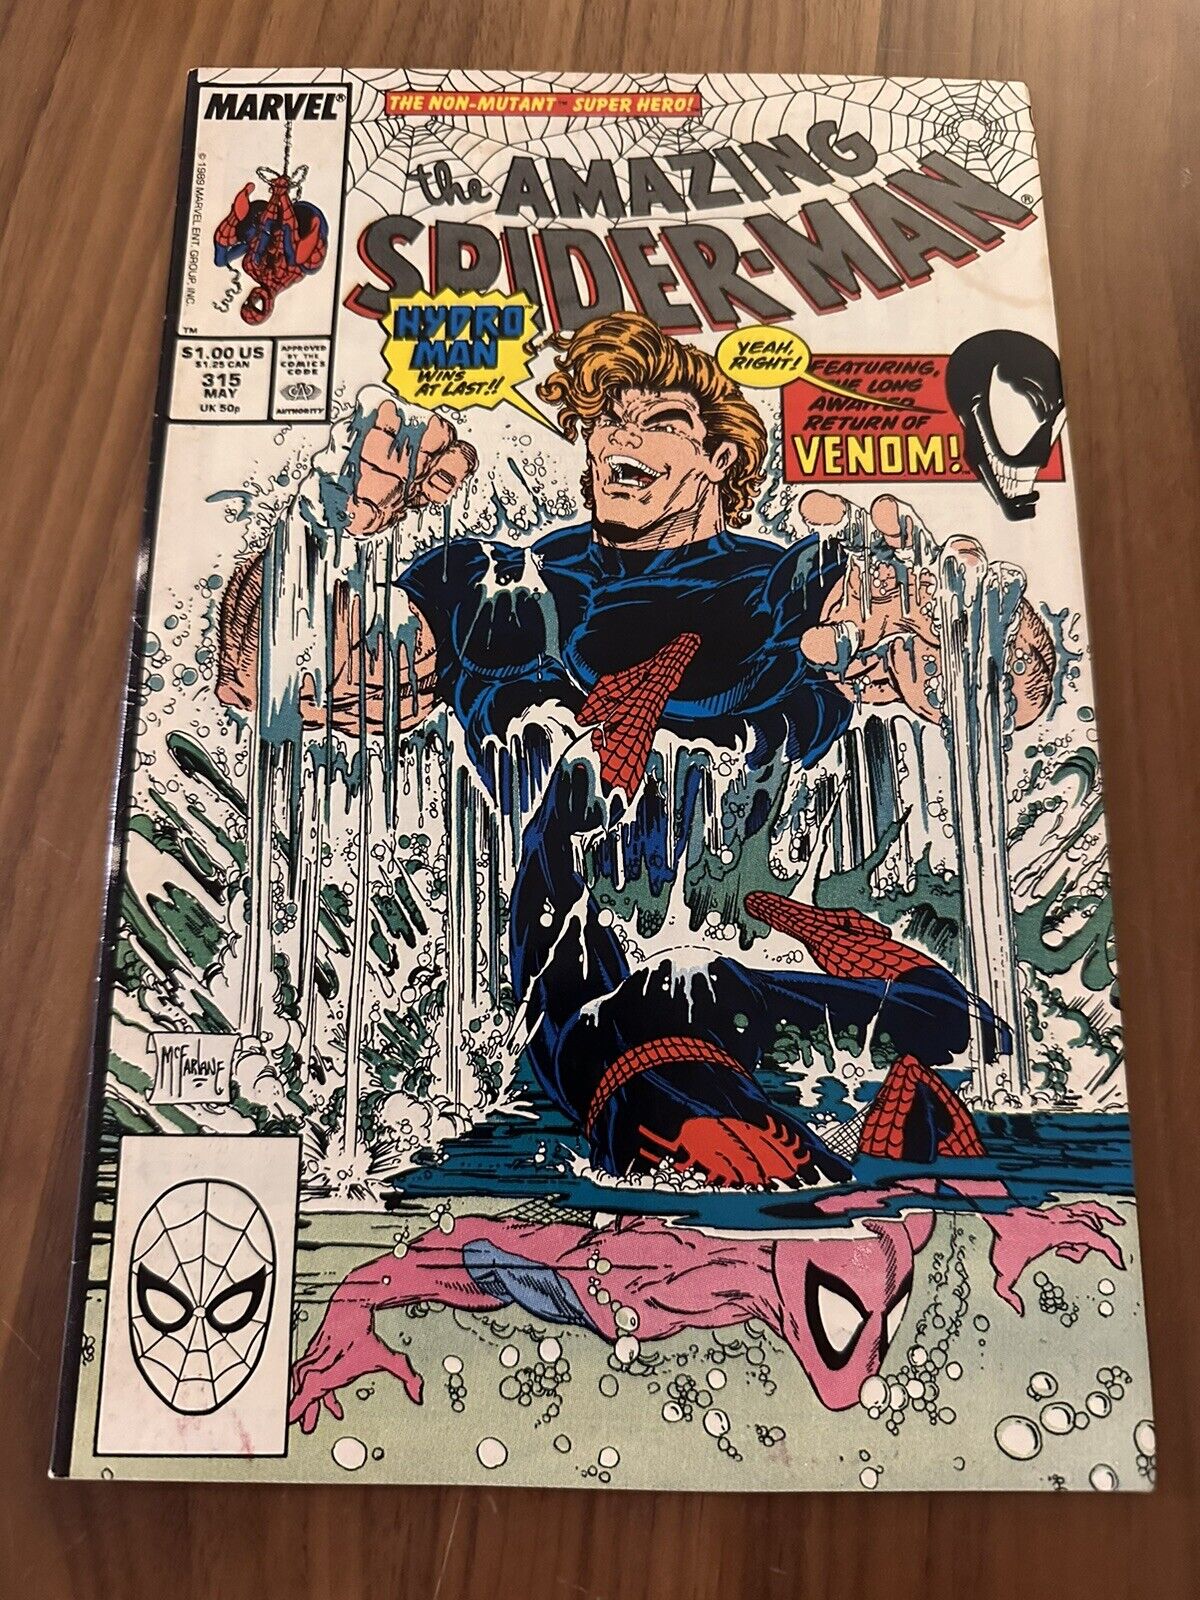 The Amazing Spider-Man #315 (Marvel Comics May 1989)